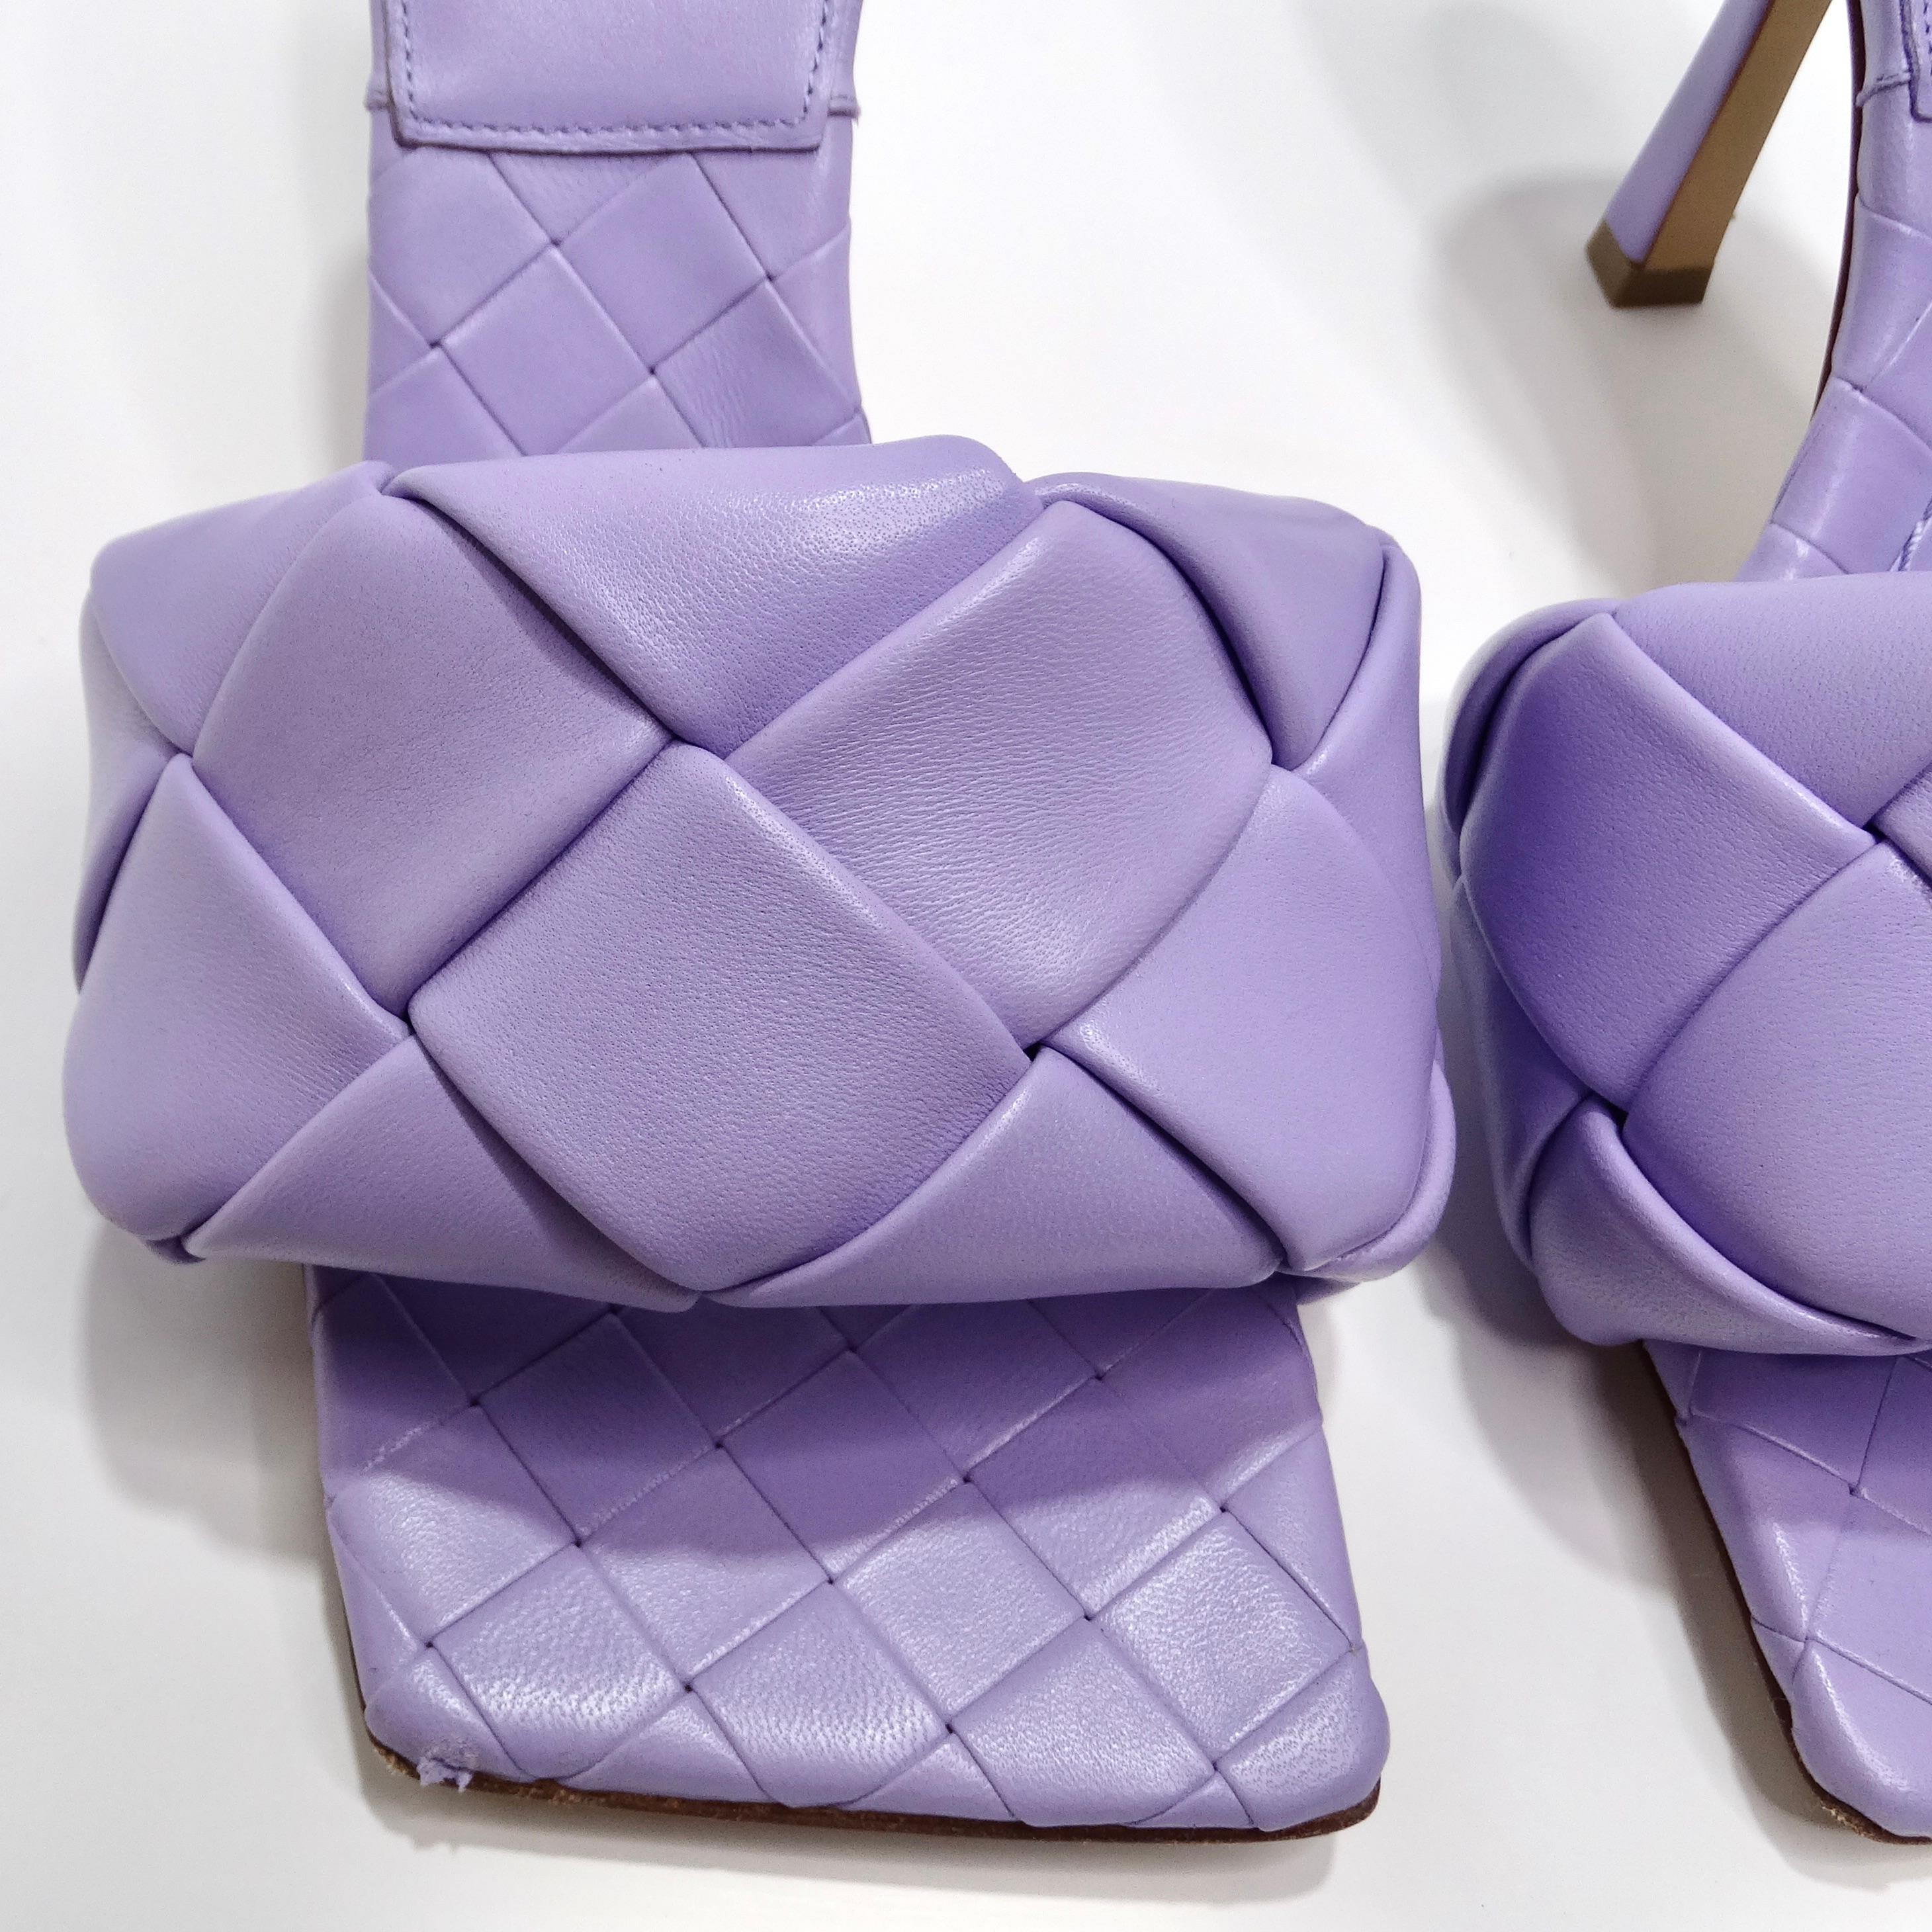 Bottega Veneta Purple Lido Sandals In Good Condition For Sale In Scottsdale, AZ